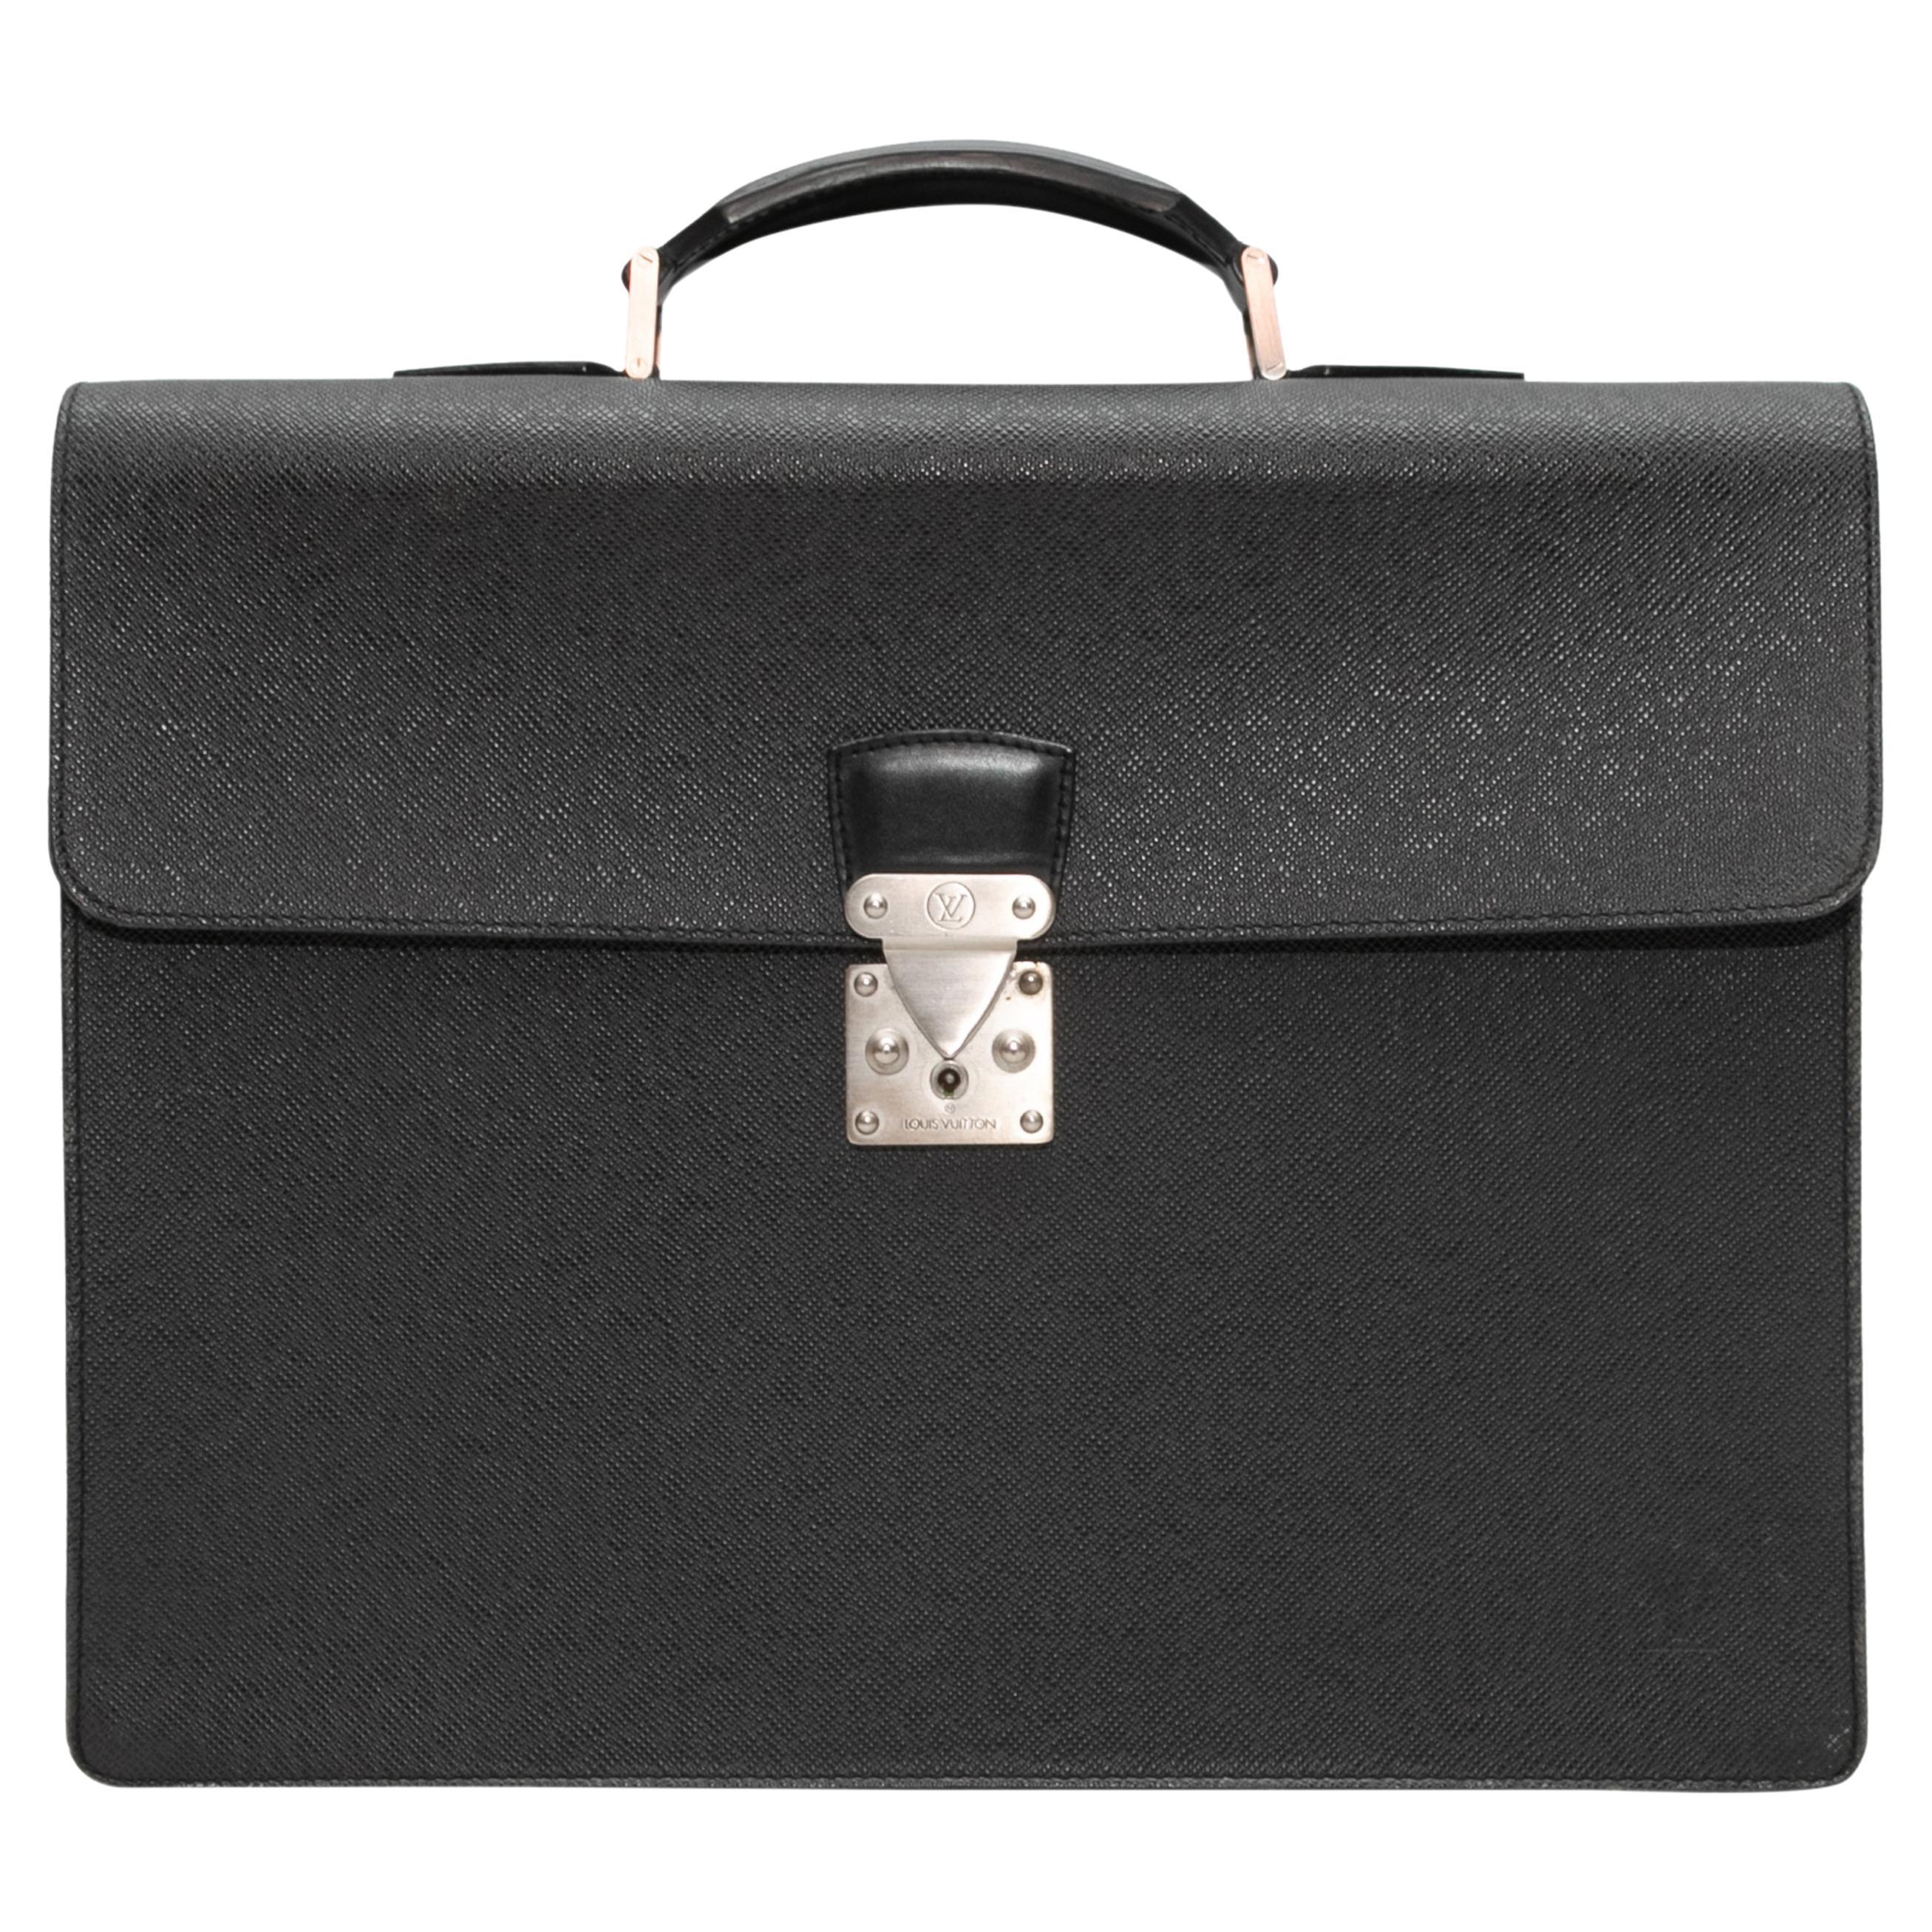 Black Louis Vuitton Leather Briefcase For Sale